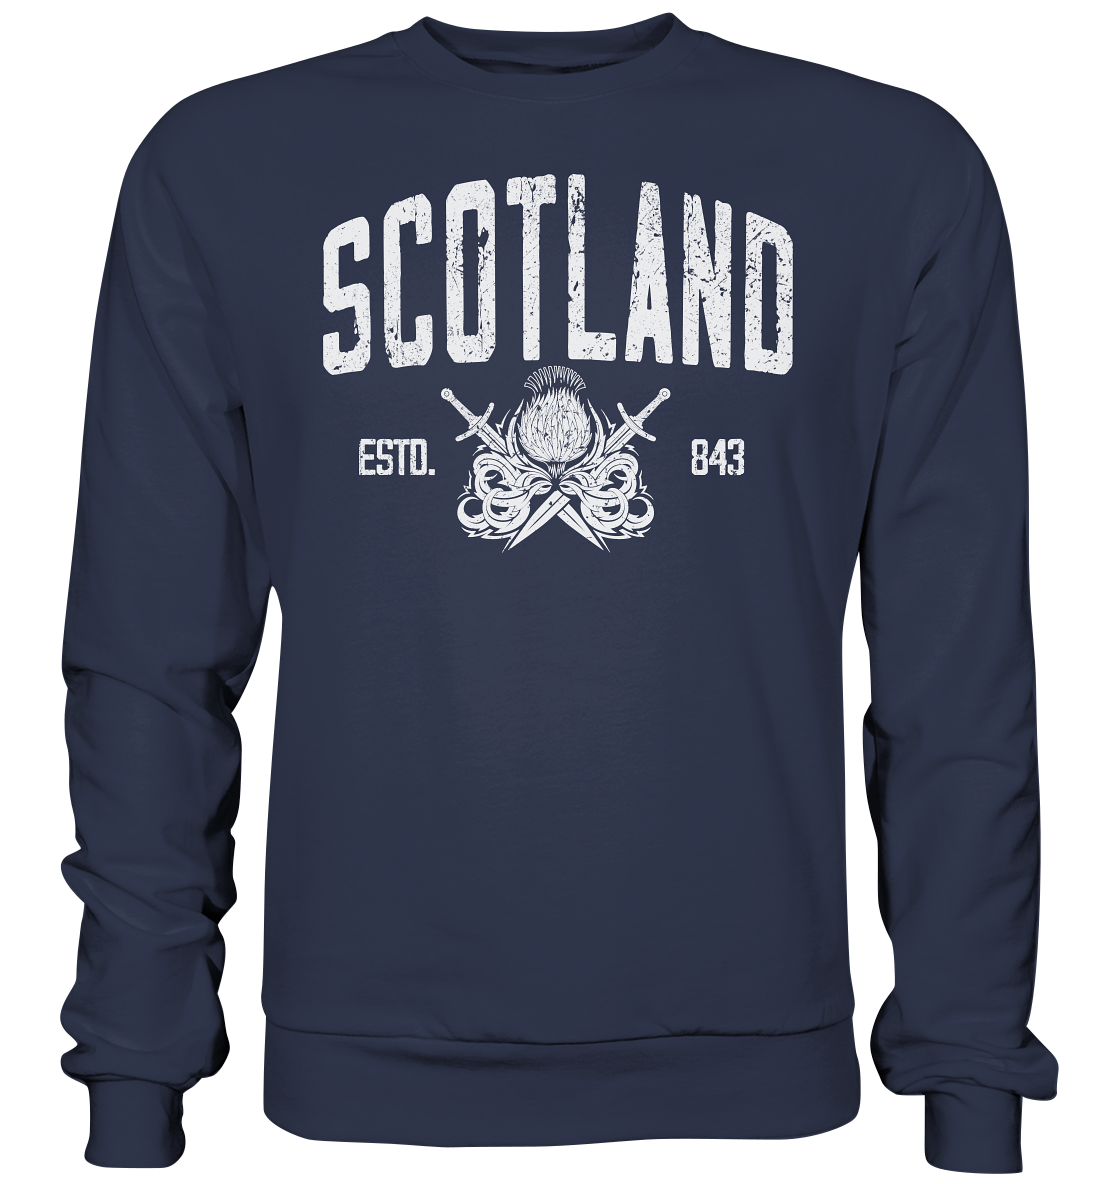 Scotland "Estd. 843" - Premium Sweatshirt